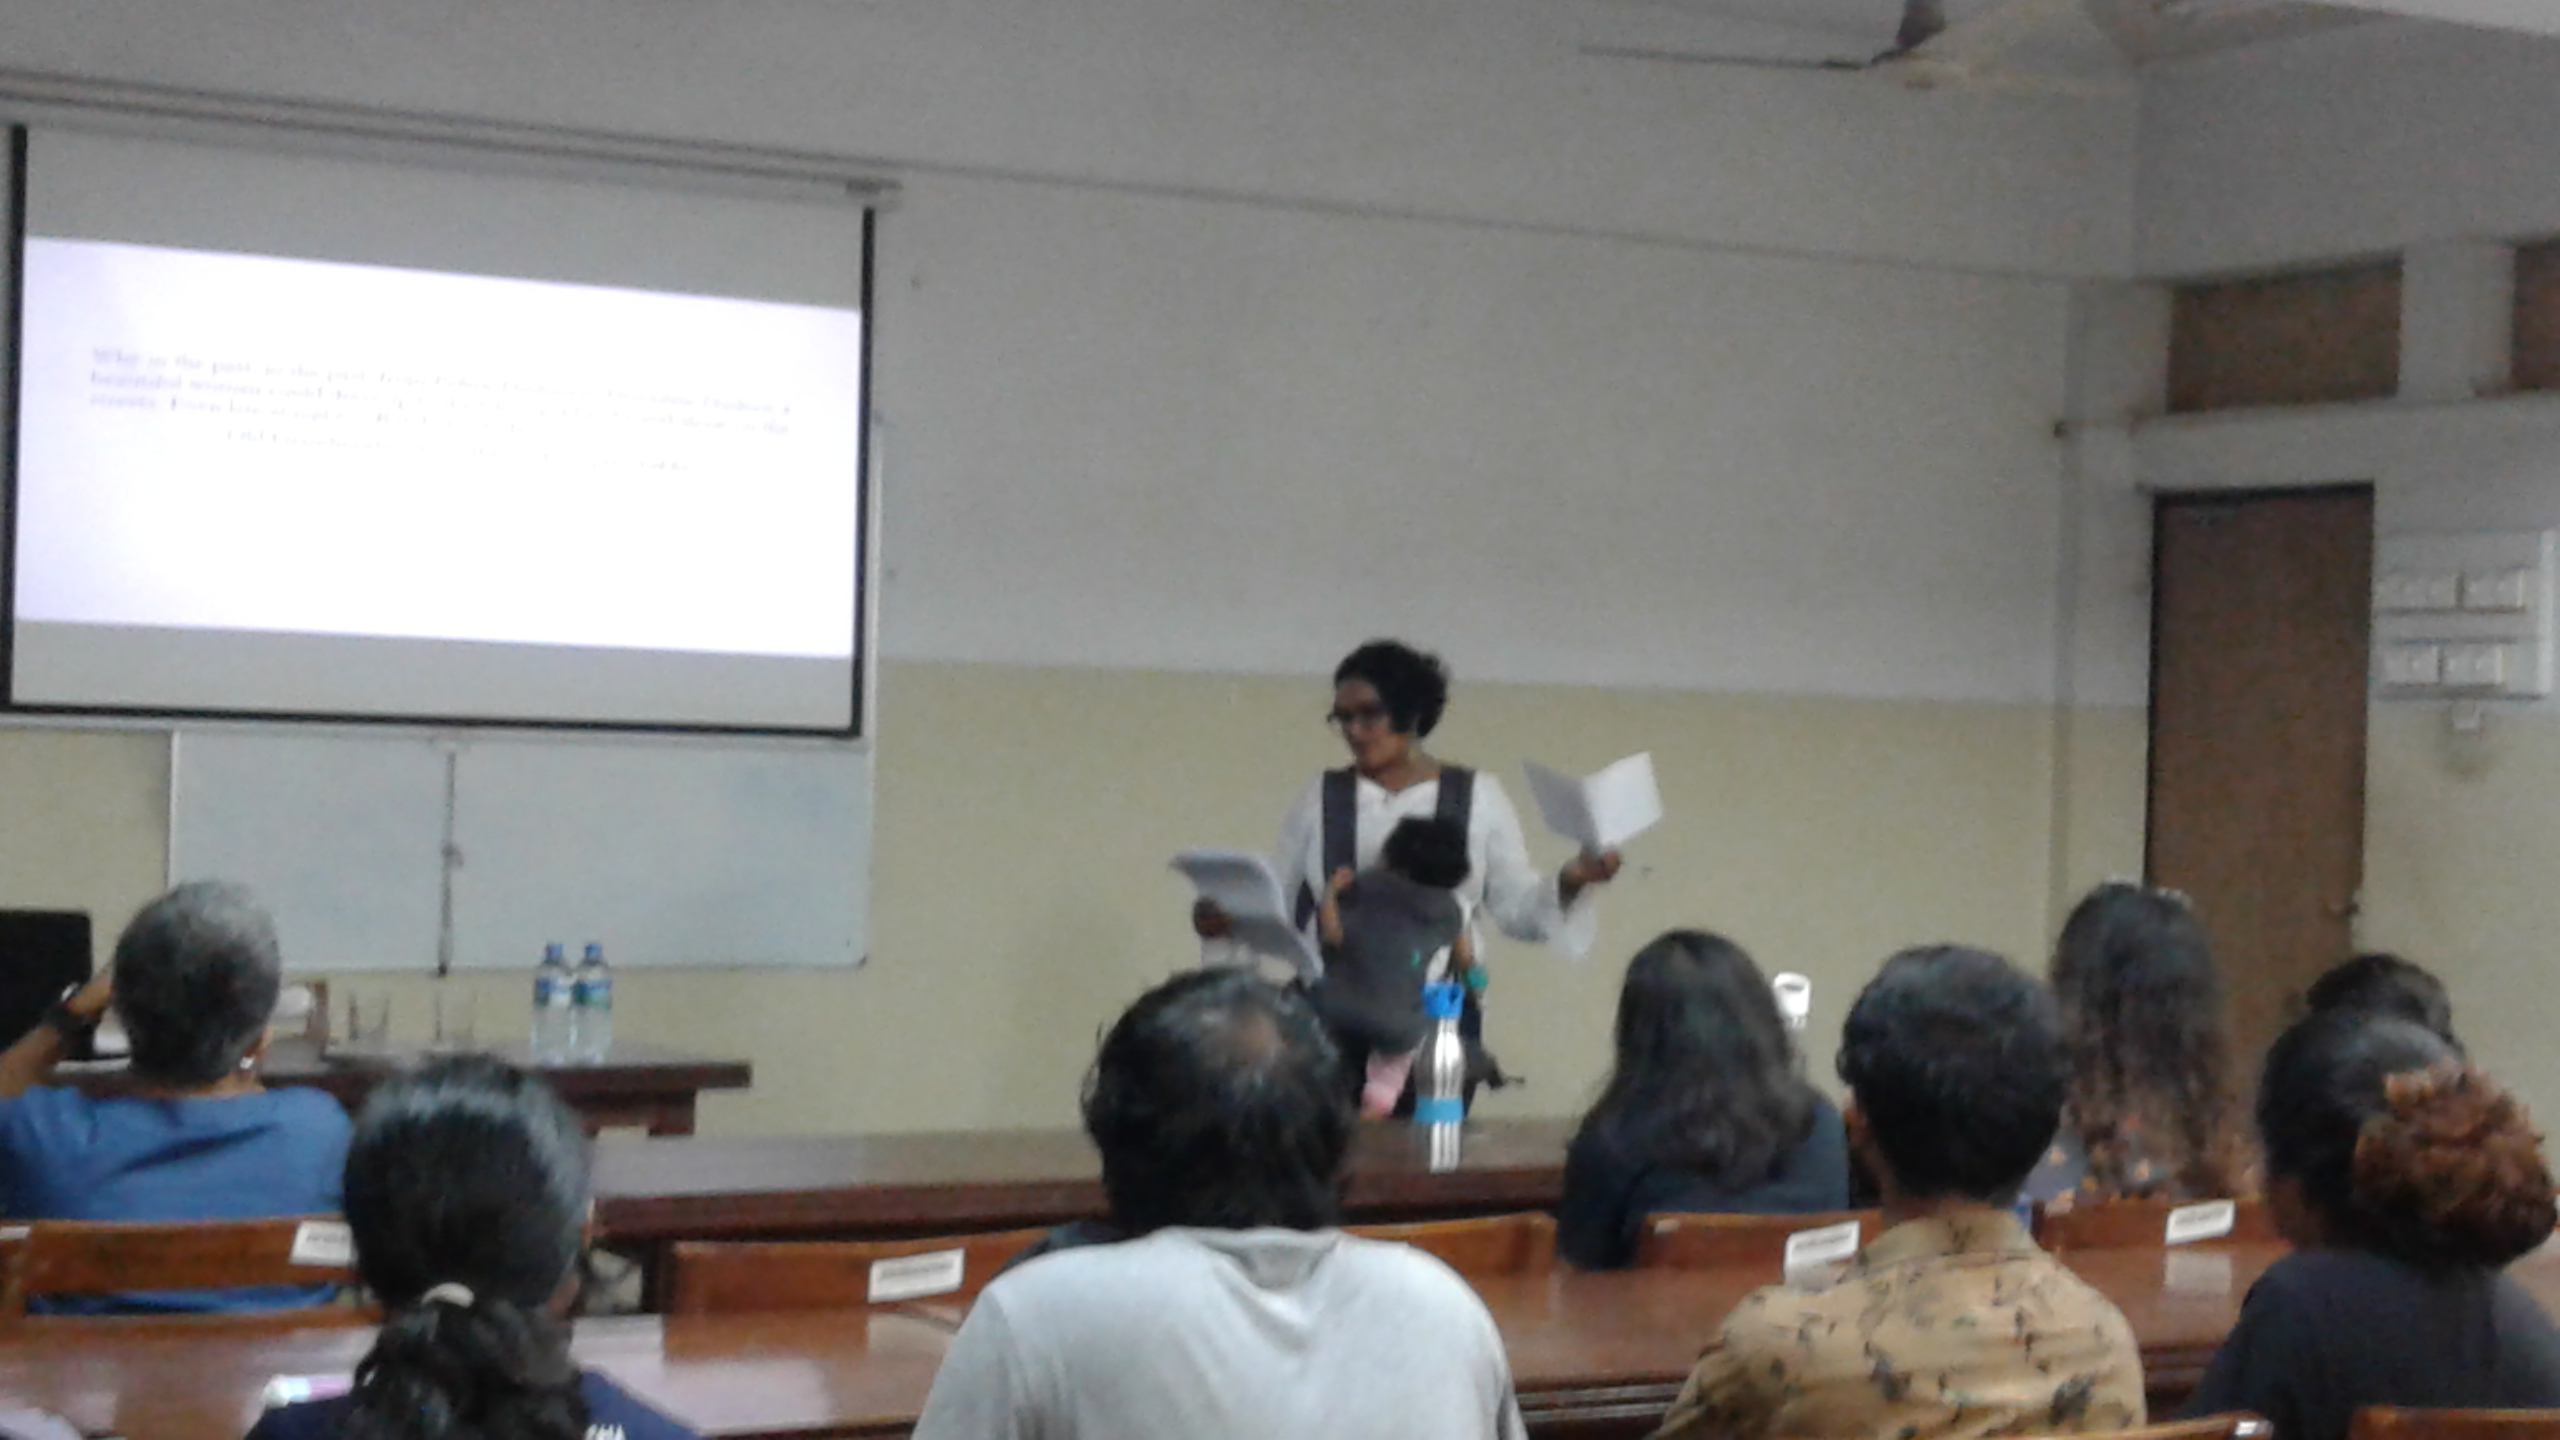 A Talk by Nimanthi Rajasingham